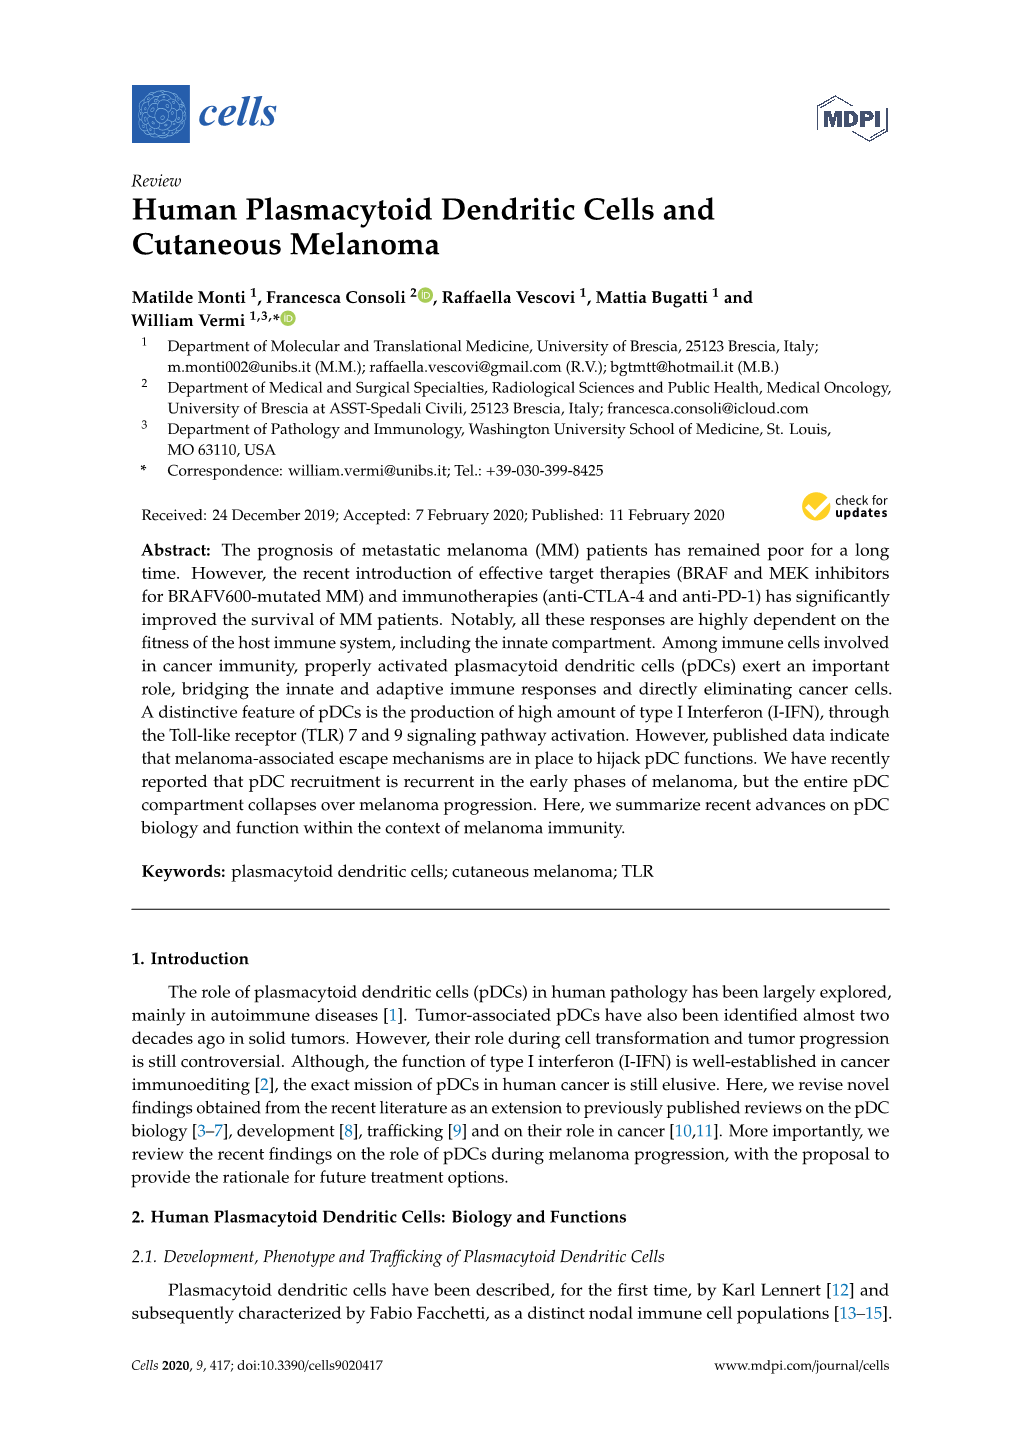 Human Plasmacytoid Dendritic Cells and Cutaneous Melanoma